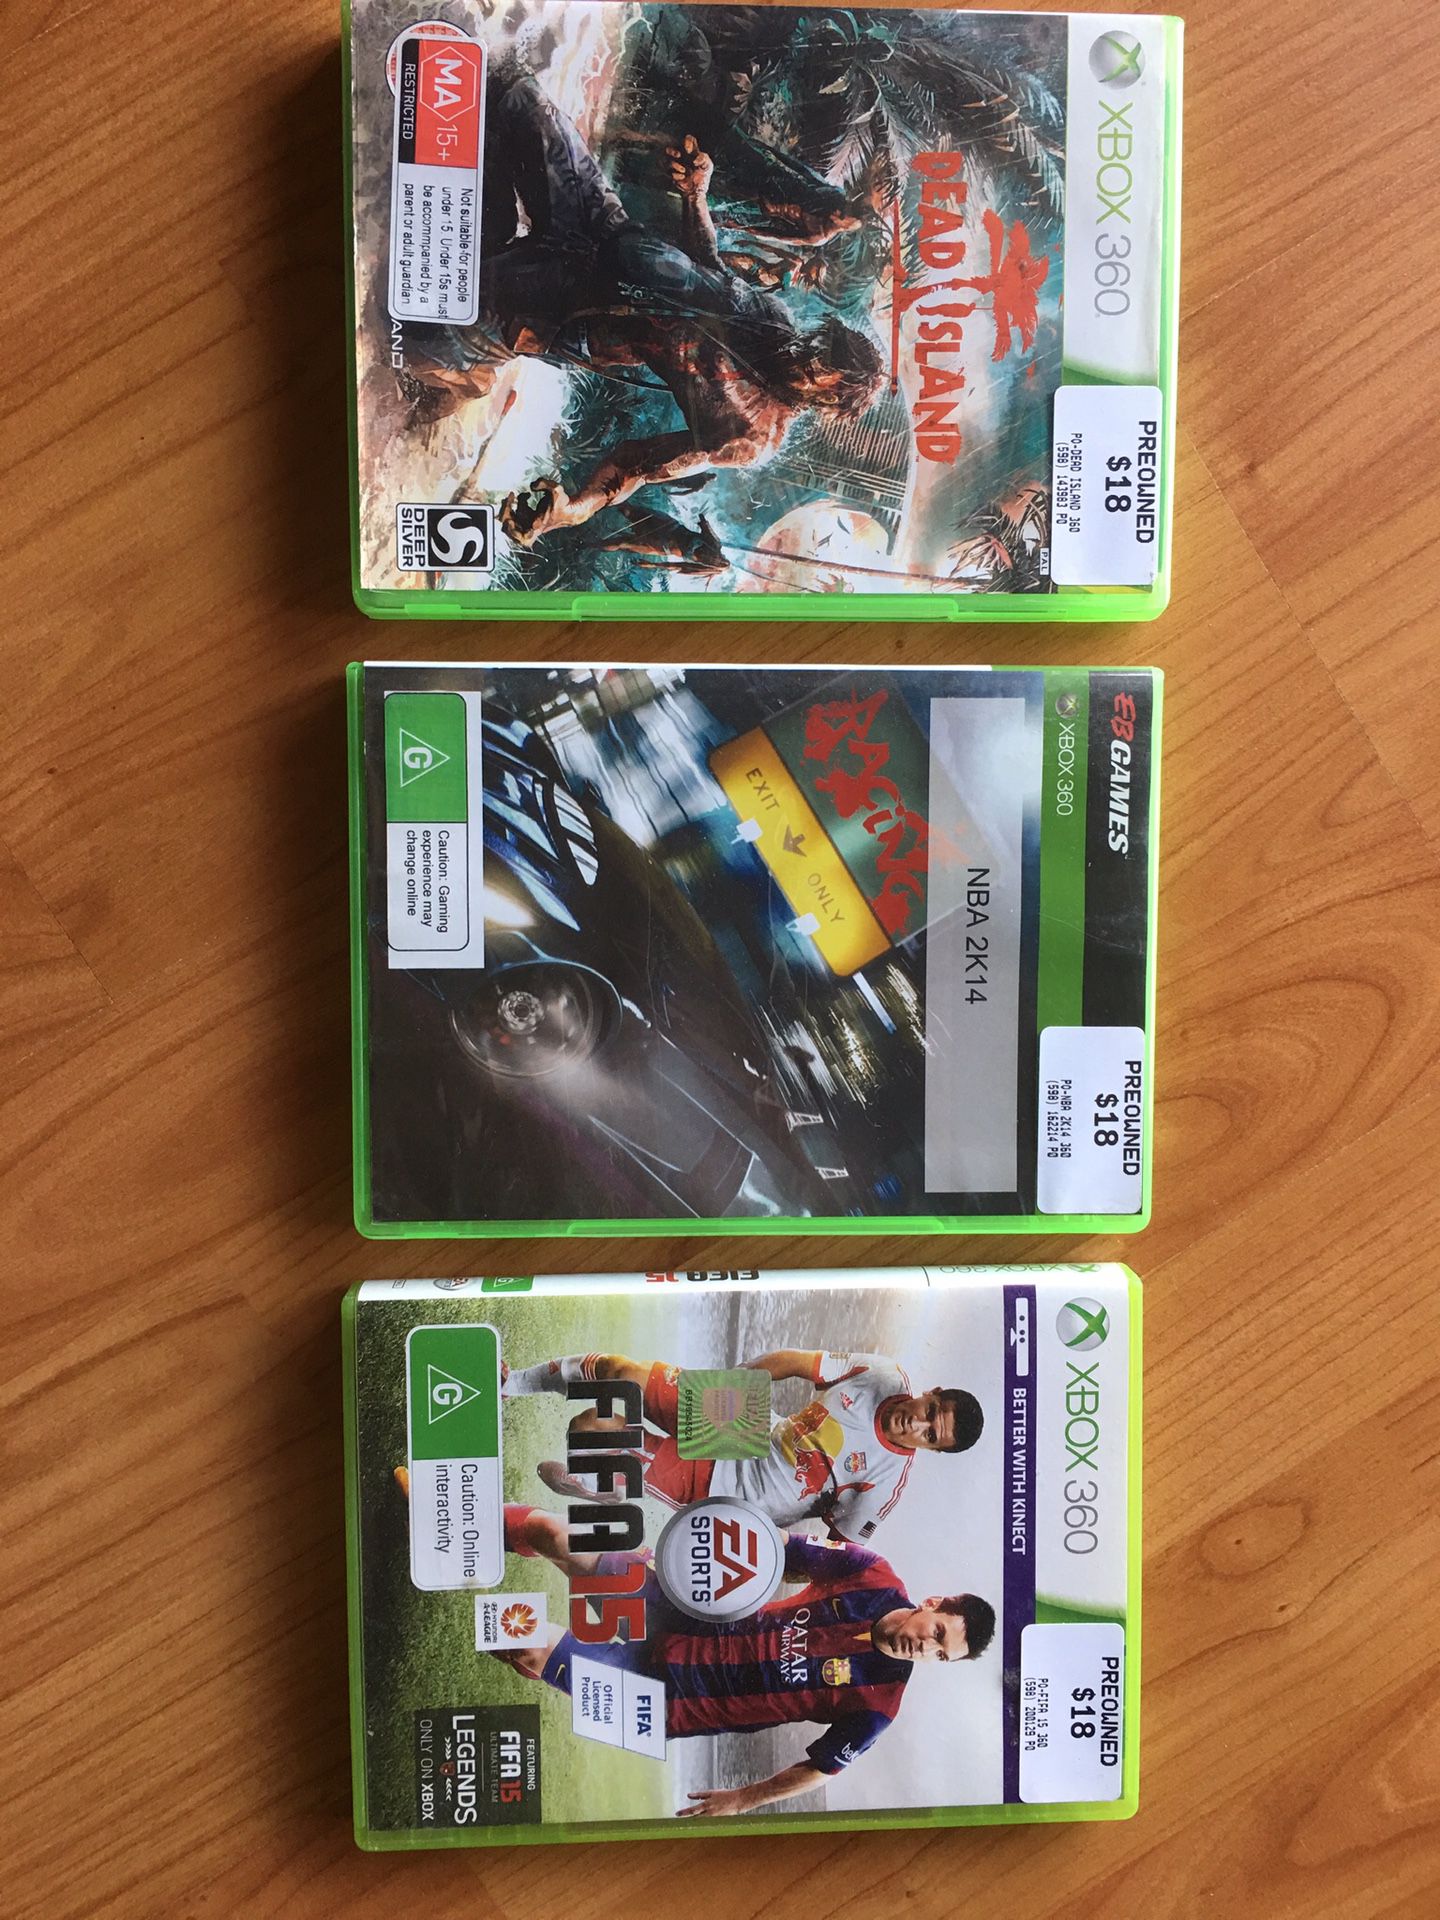 3 Xbox 360 games